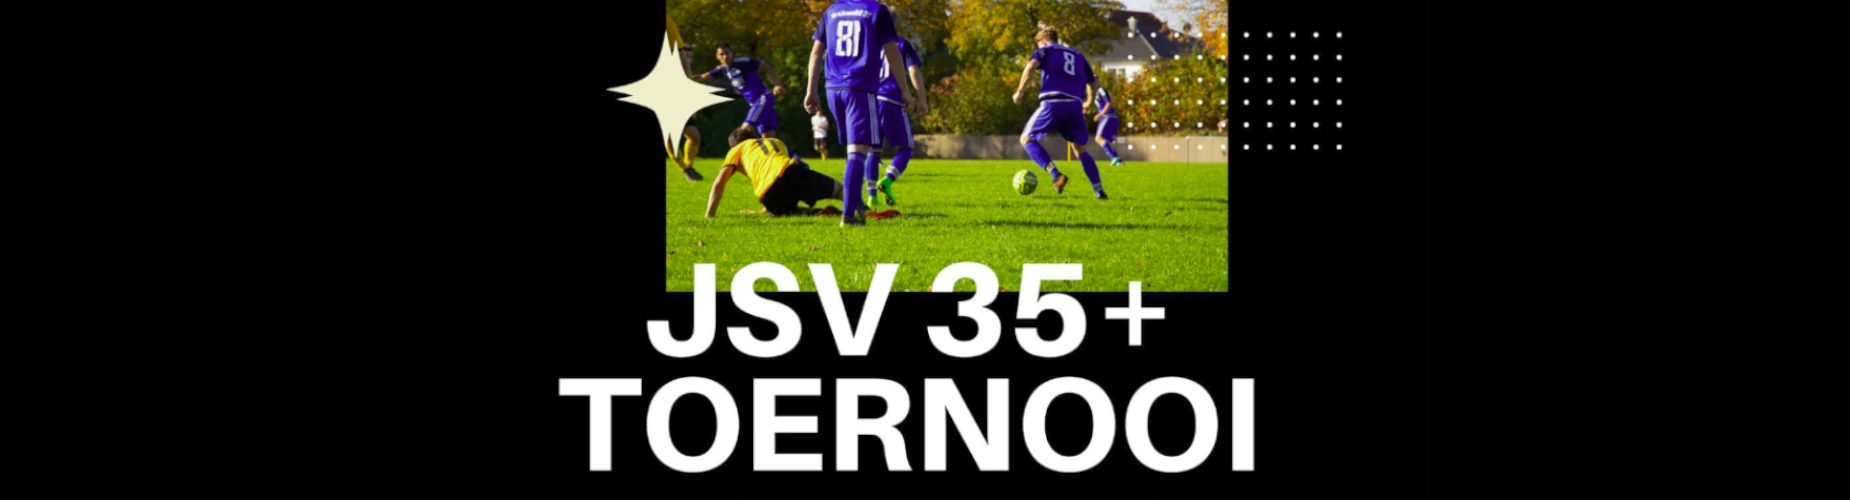 Banner - 35+ Toernooi - JSV Nieuwegein - Nieuwegein